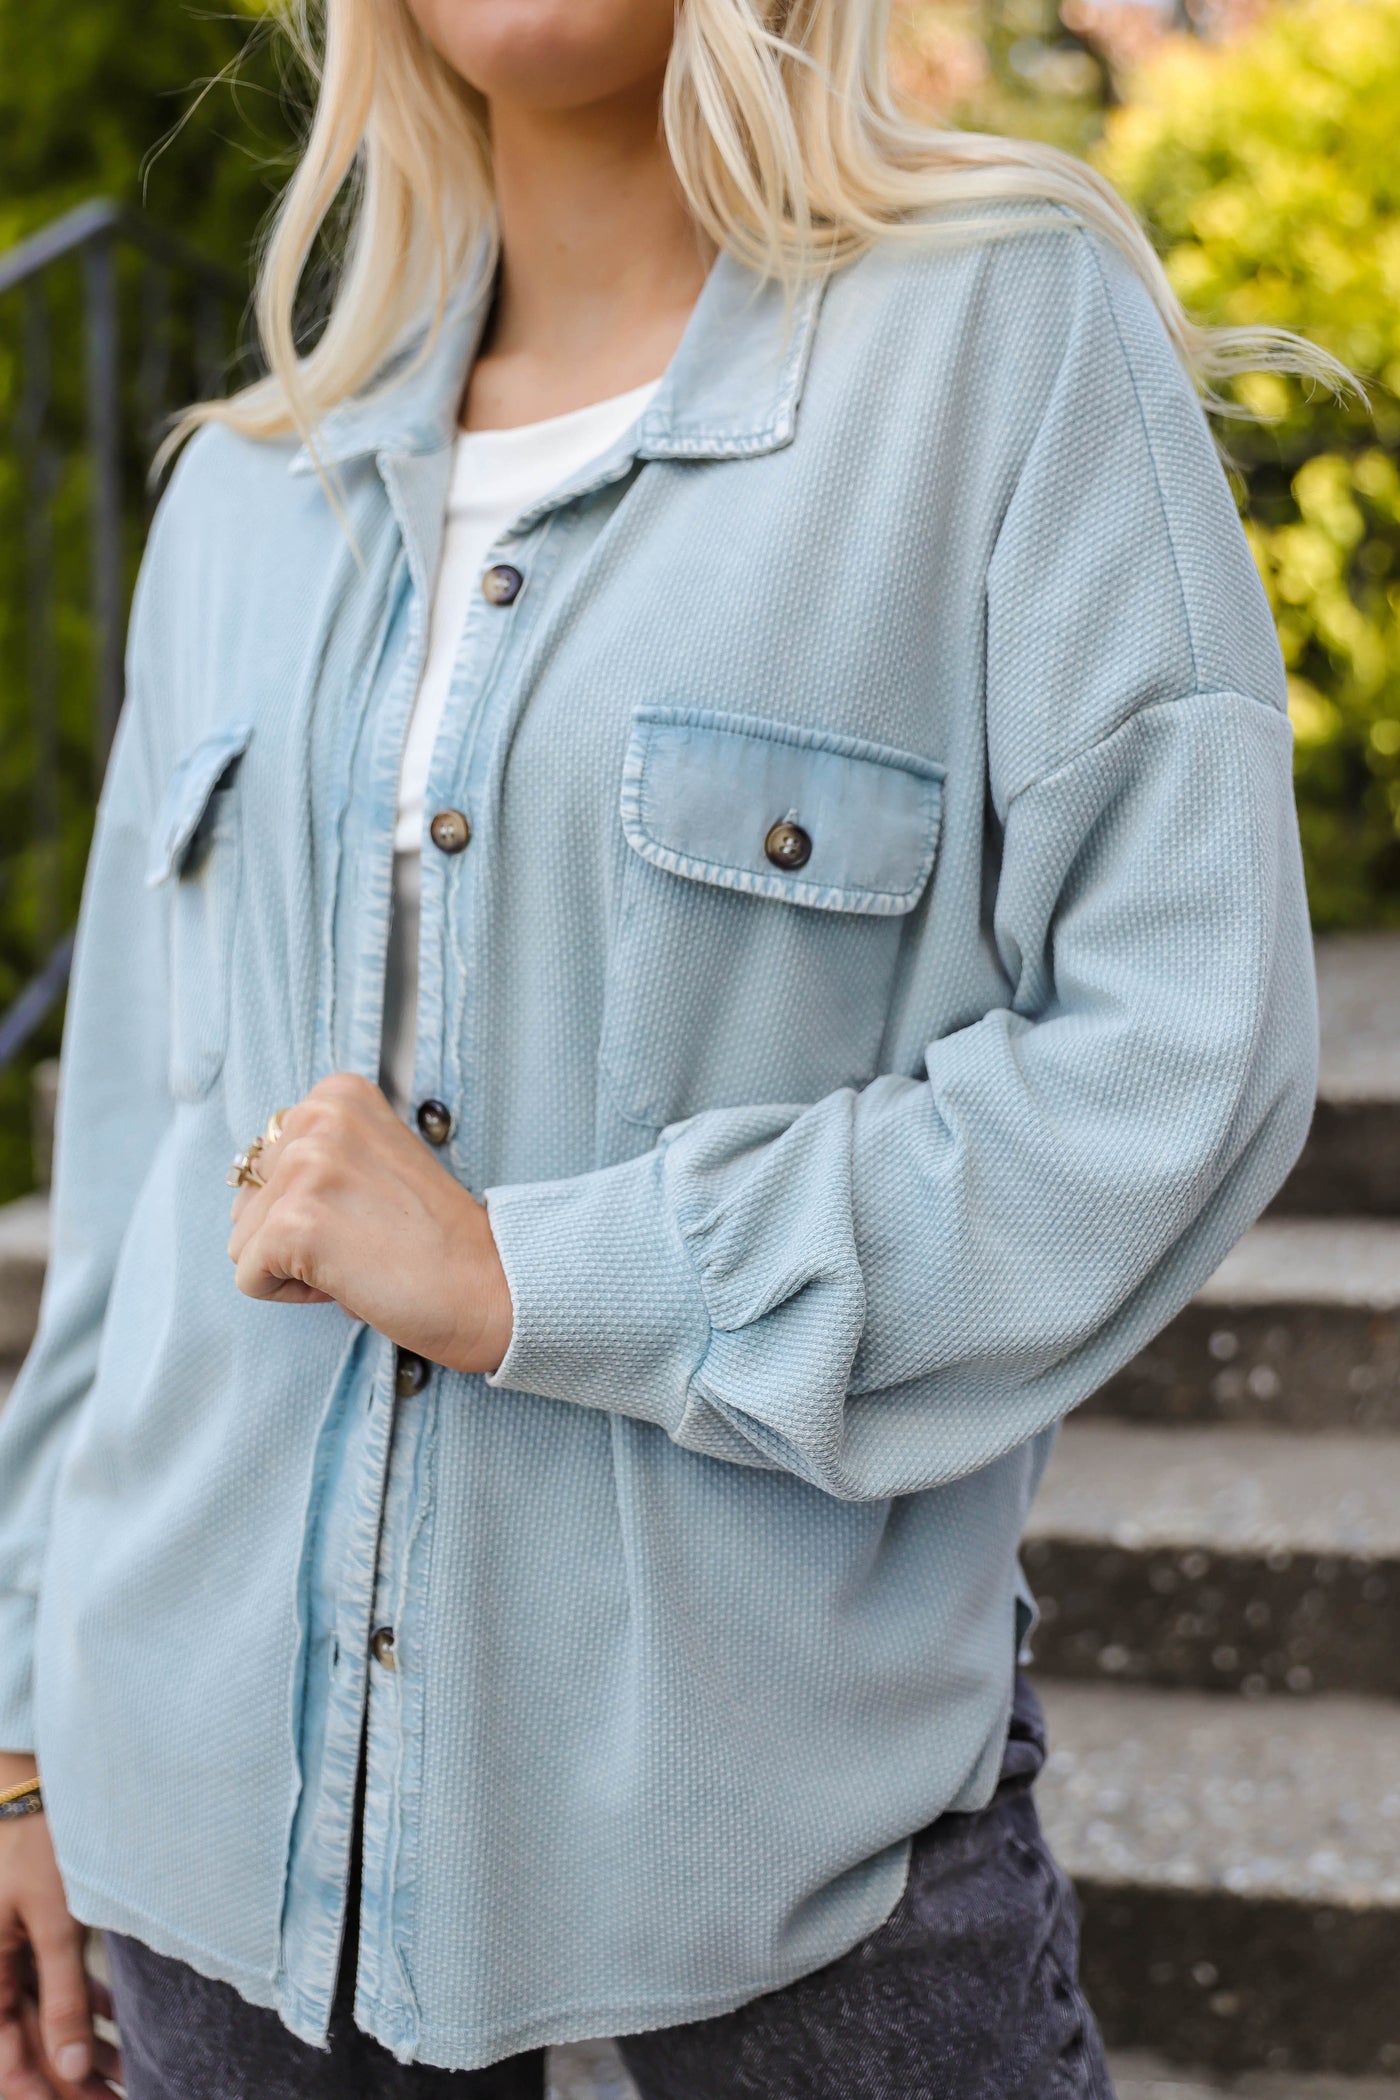 Soft Waffle Knit Top- Women's Distressed Button Down-Women's Light Weight Long Sleeve Top-Blue B Button Down